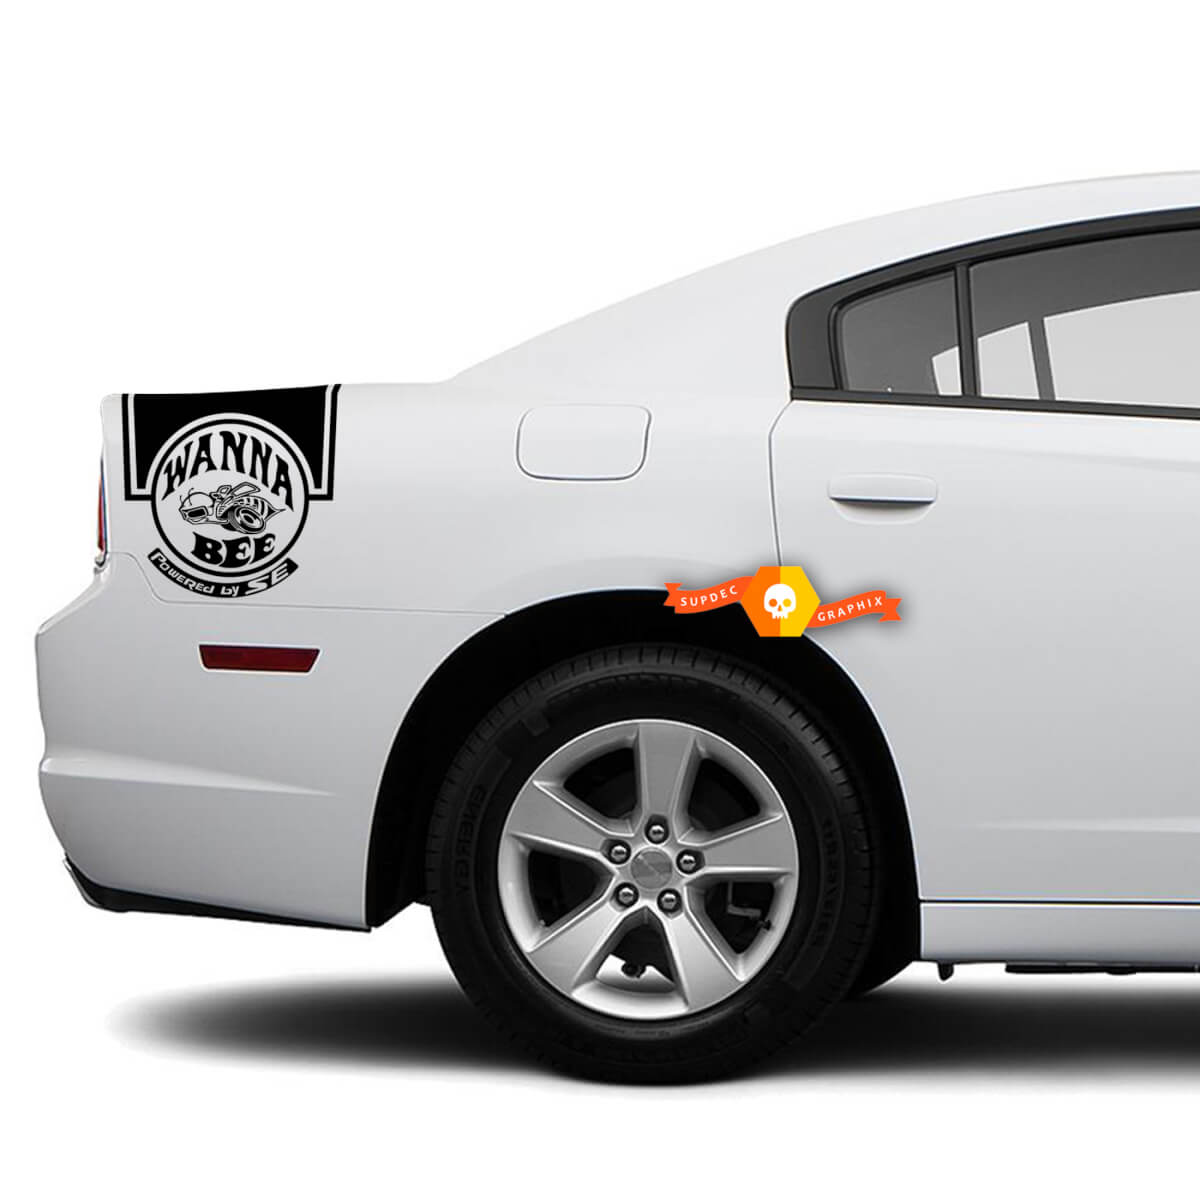 Dodge Charger Rückseite Band Aufkleber Aufkleber Wanna Bee SRT Grafik passend für Modelle 2011-2014
